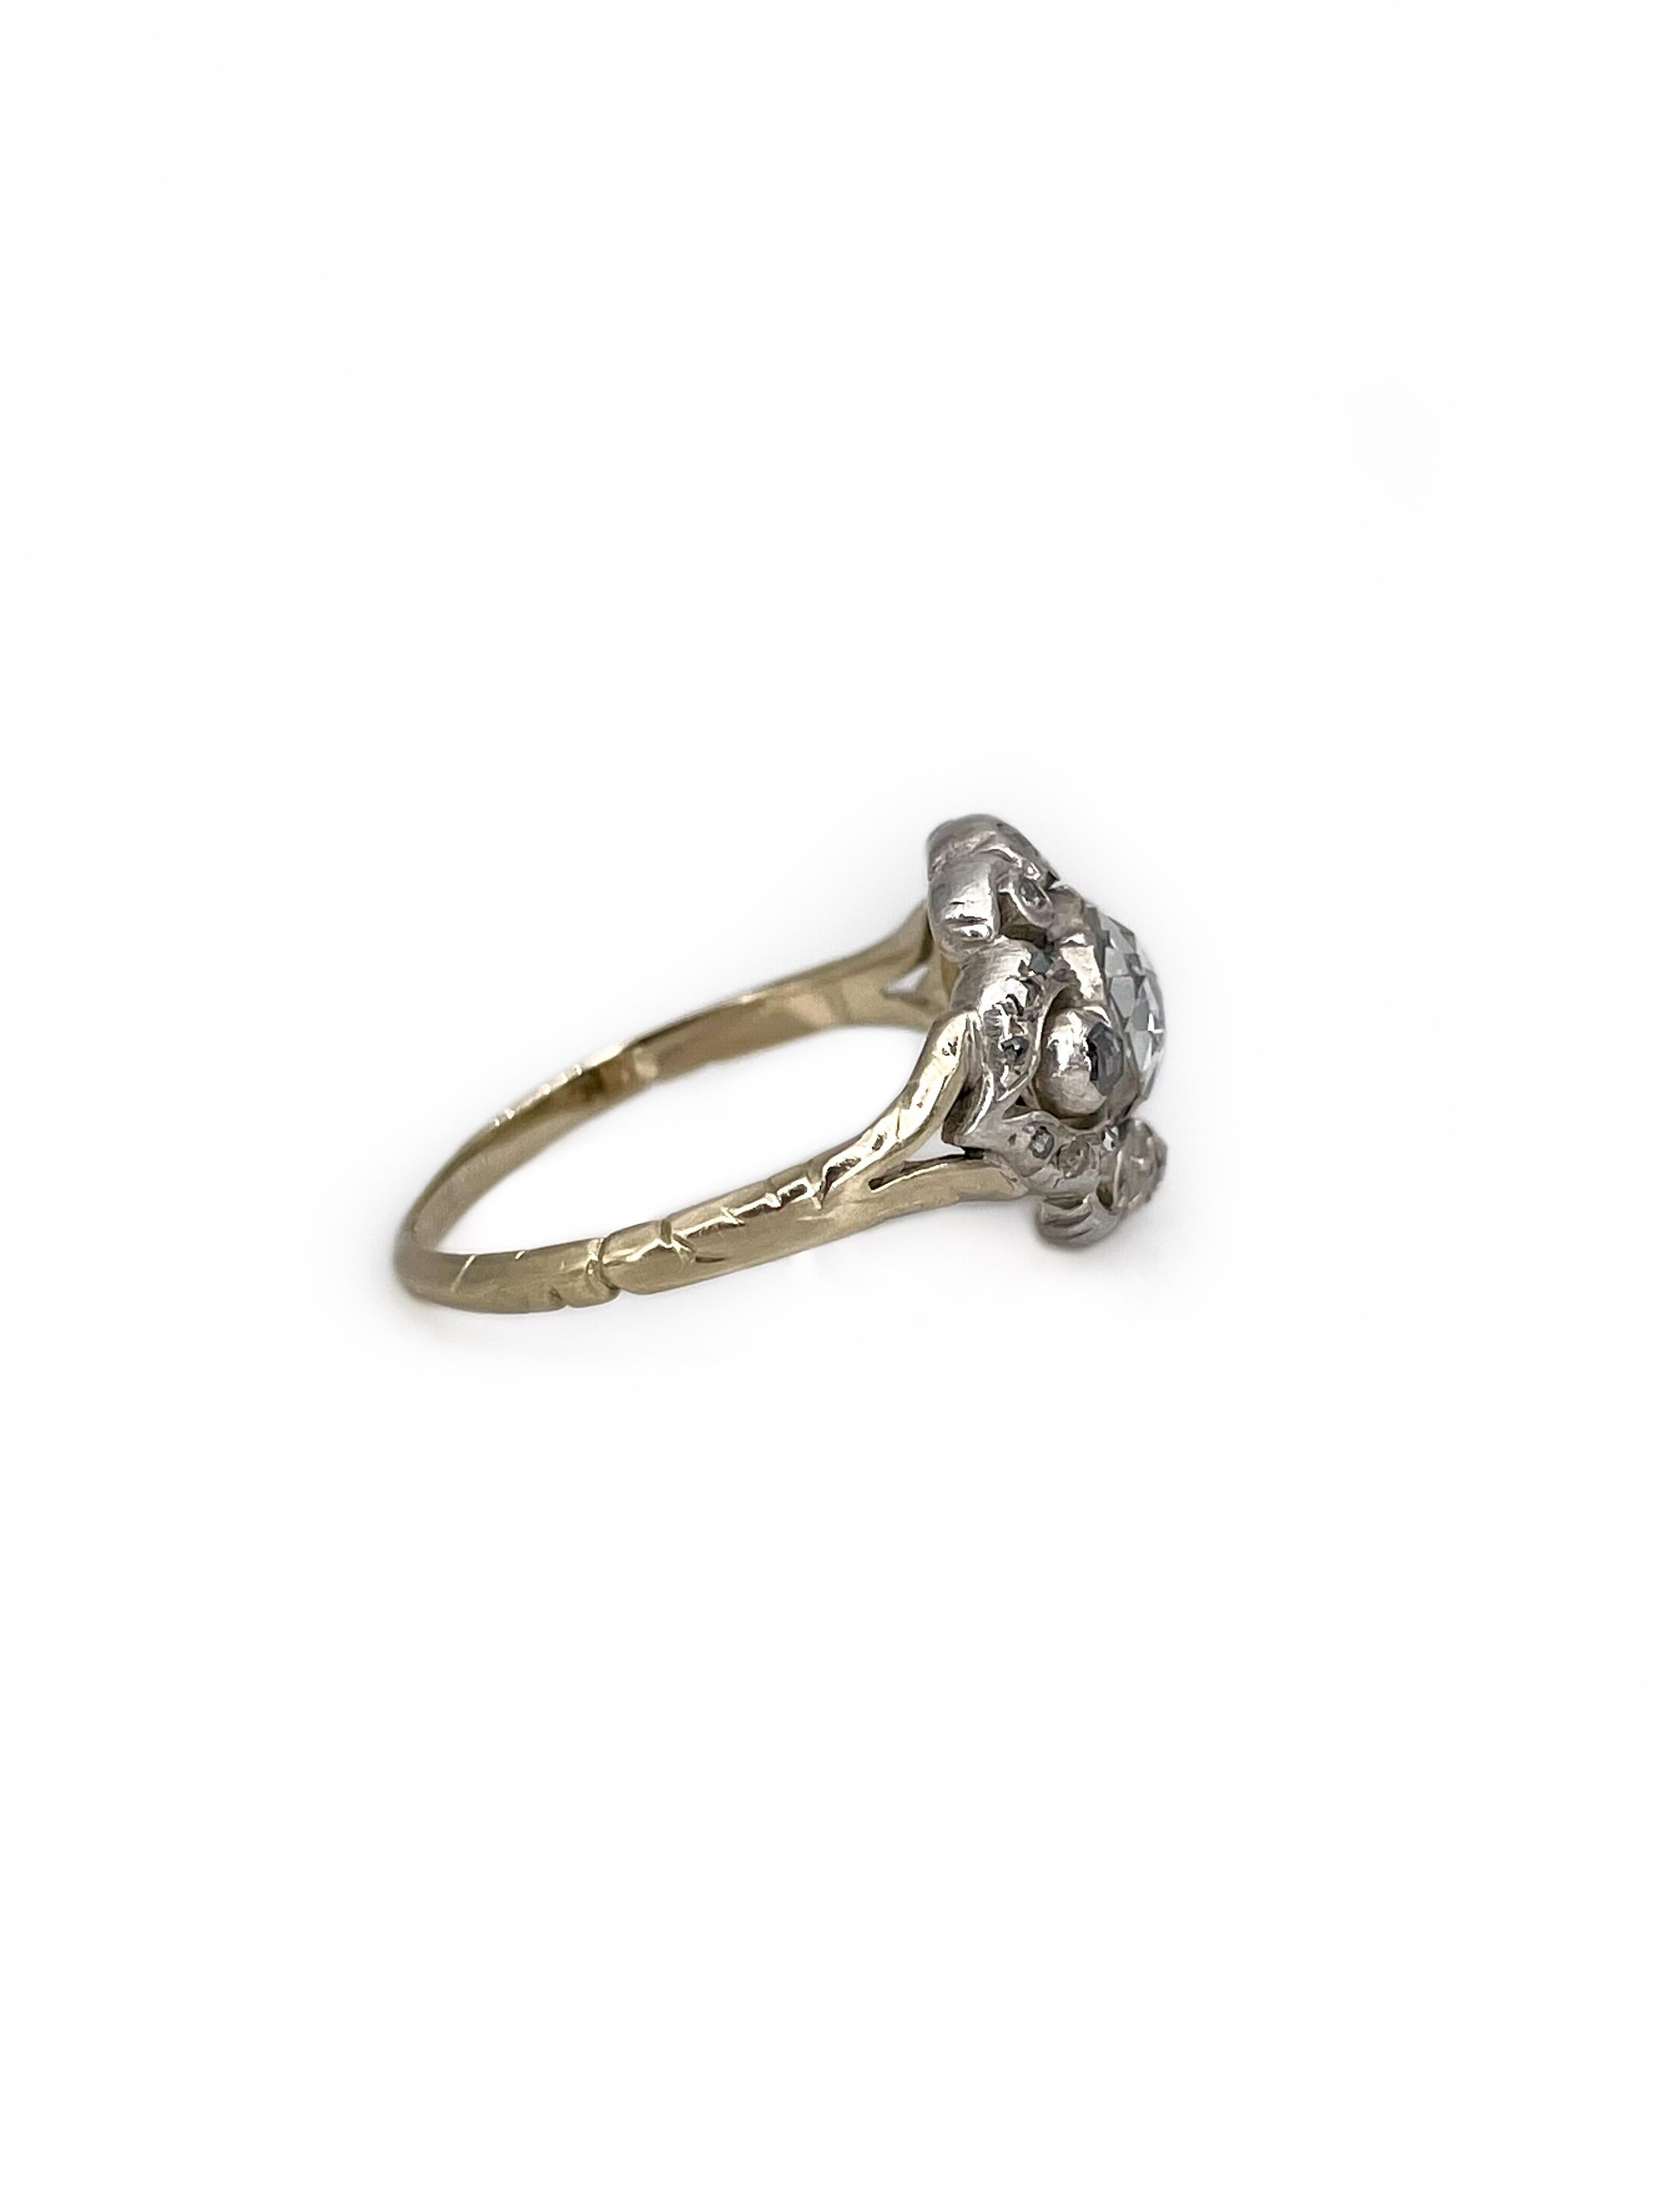 Women's Antique Victorian 14K Gold Rose Cut Diamond Engagement Ring